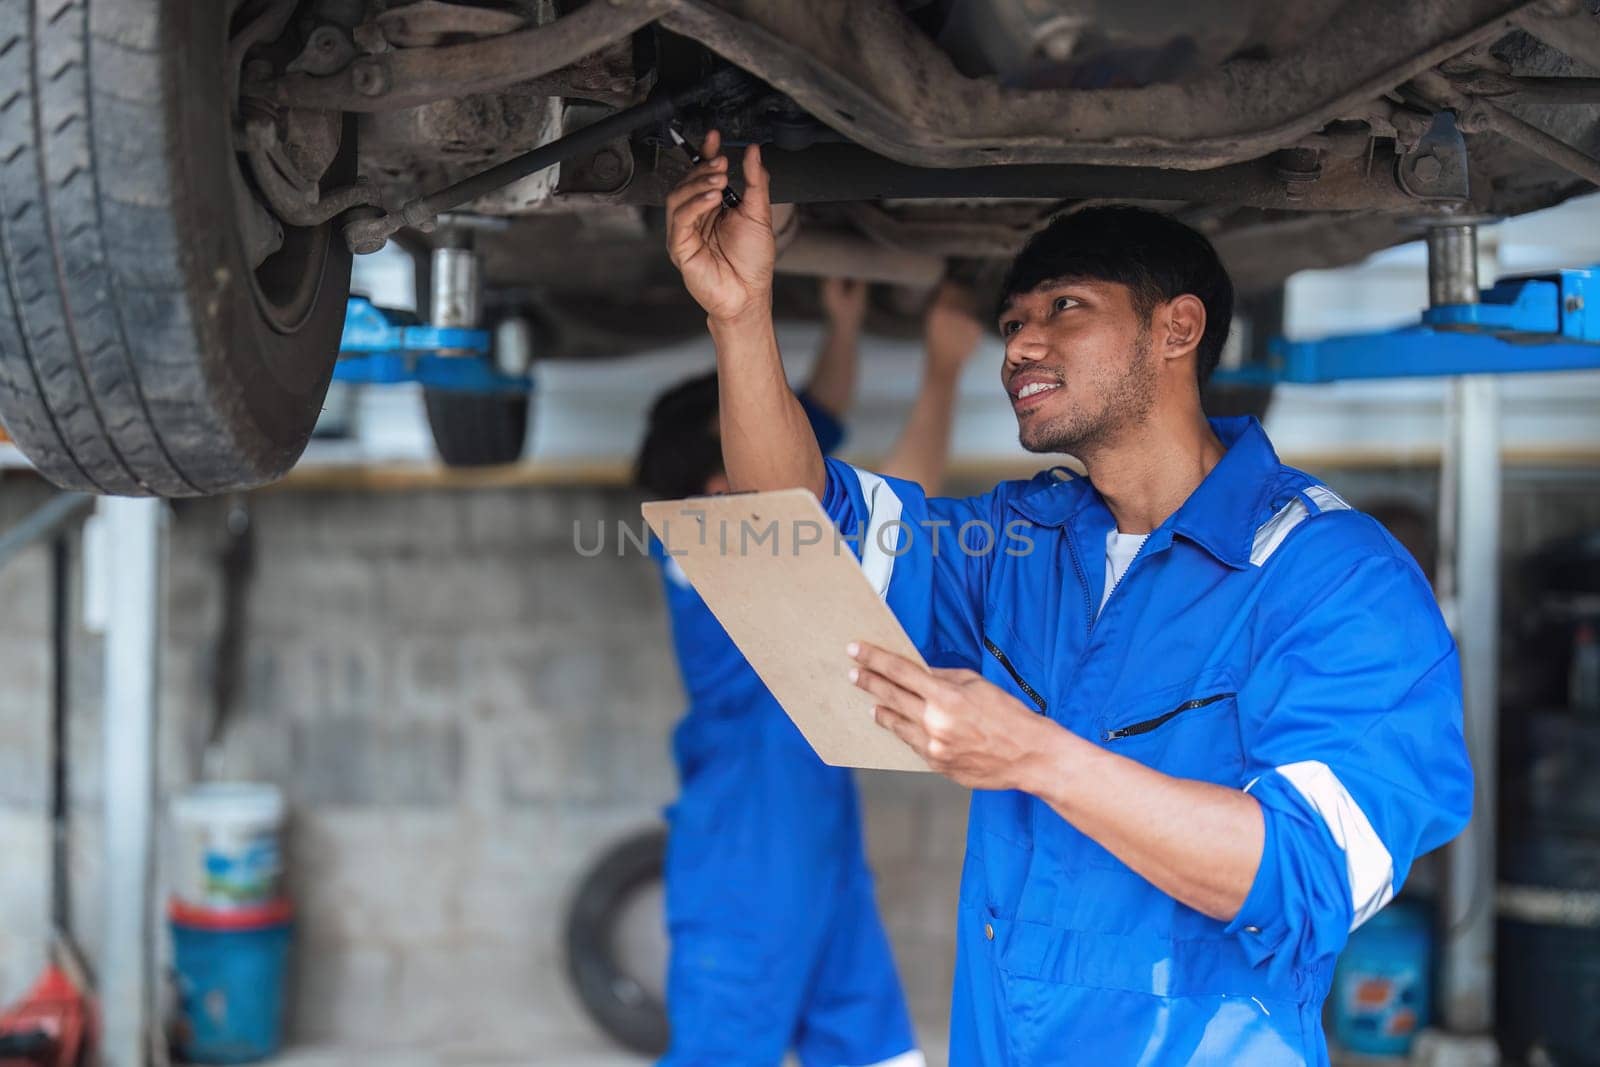 Vehicle service maintenance asian man checking under car condition in garage. Automotive mechanic maintenance checklist document. Car repair service concept by nateemee